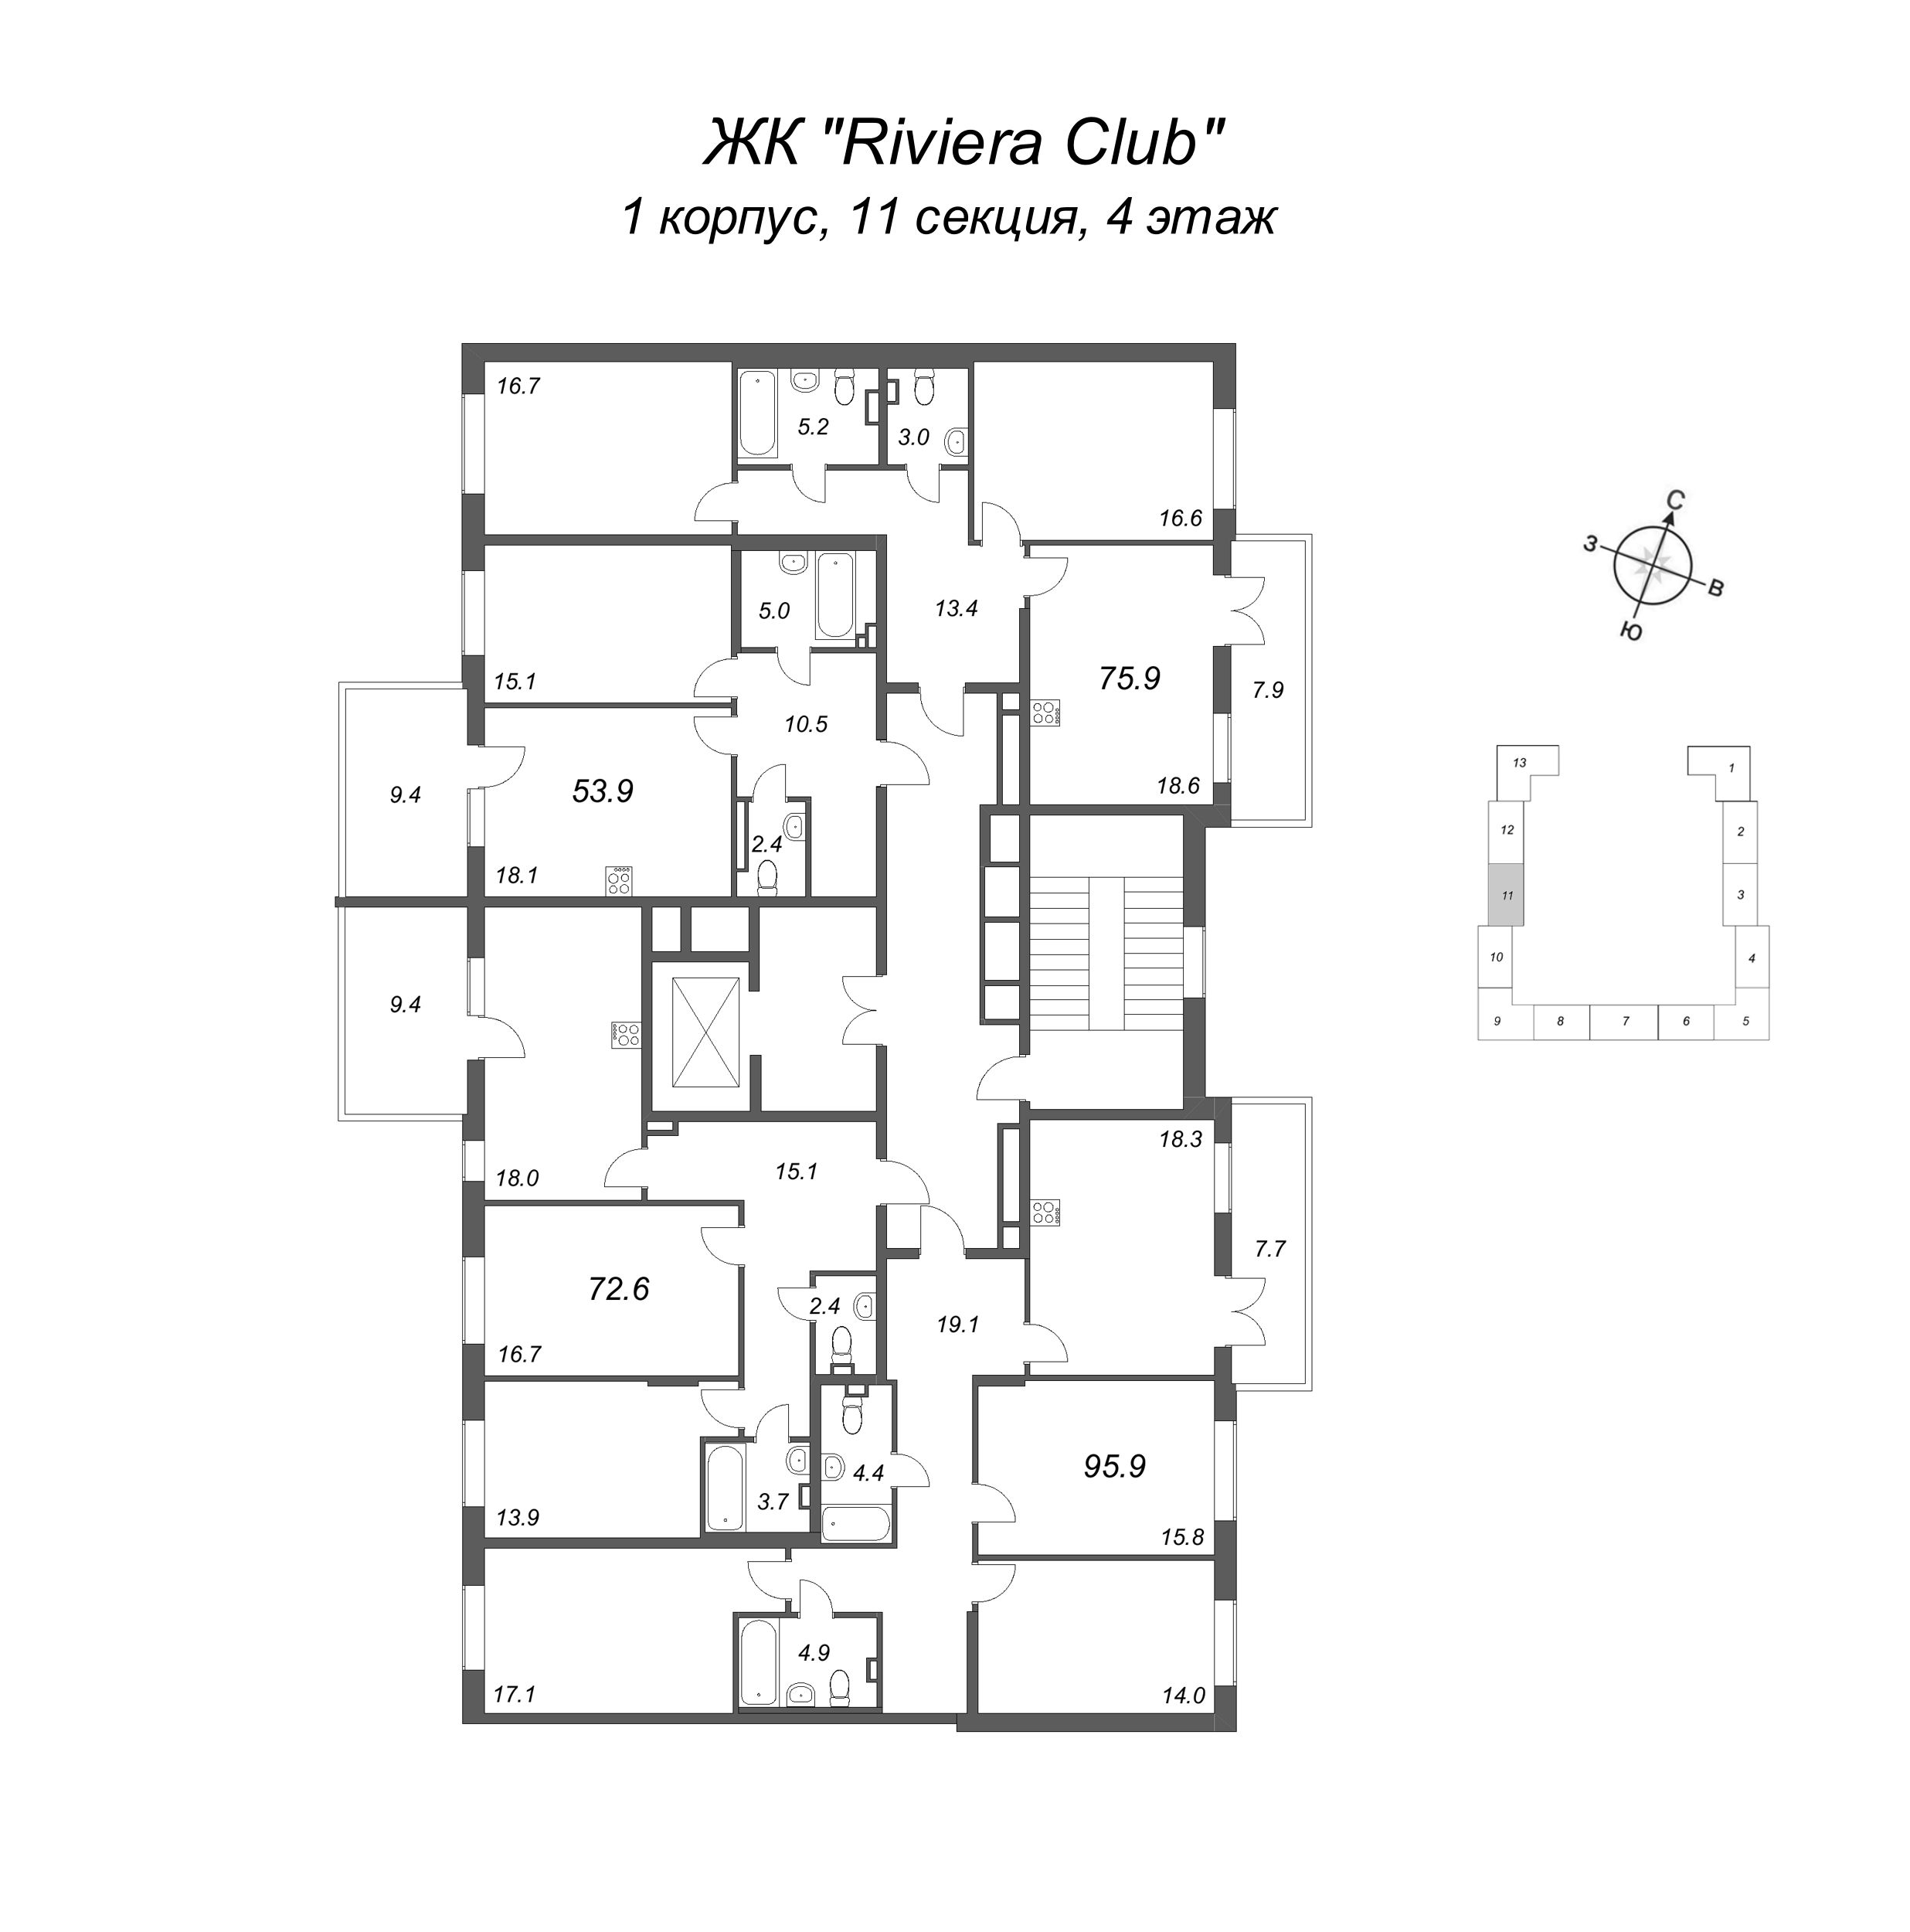 3-комнатная (Евро) квартира, 72.6 м² в ЖК "Riviera Club" - планировка этажа